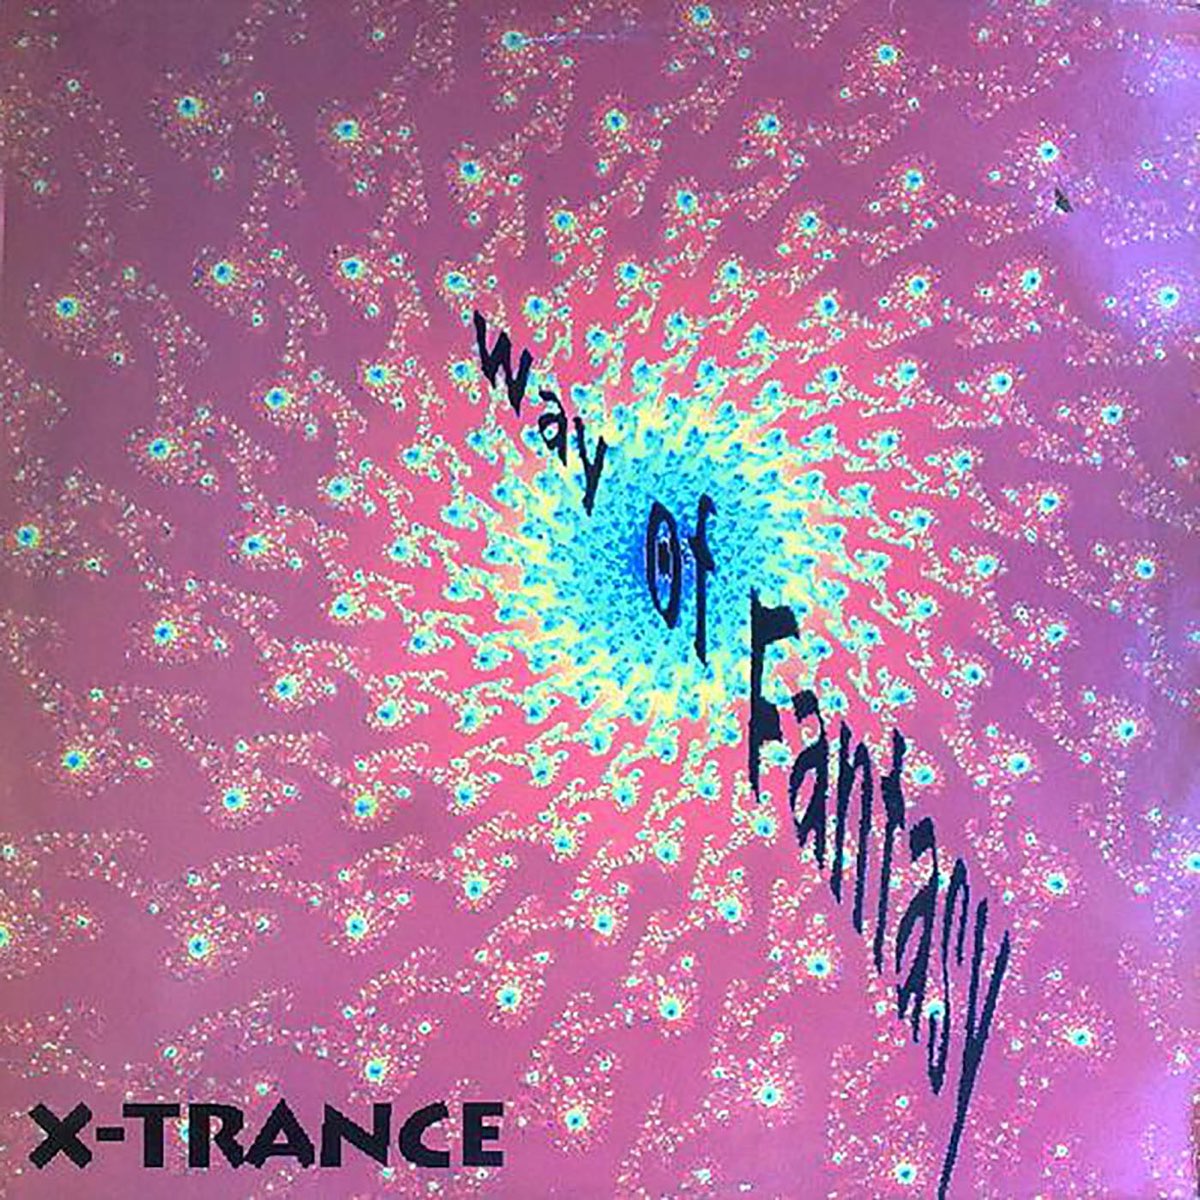 Trance x. X Trance. X Trance friends. X-Trance Filter. Music Trance Hypnotic 1995 1996.